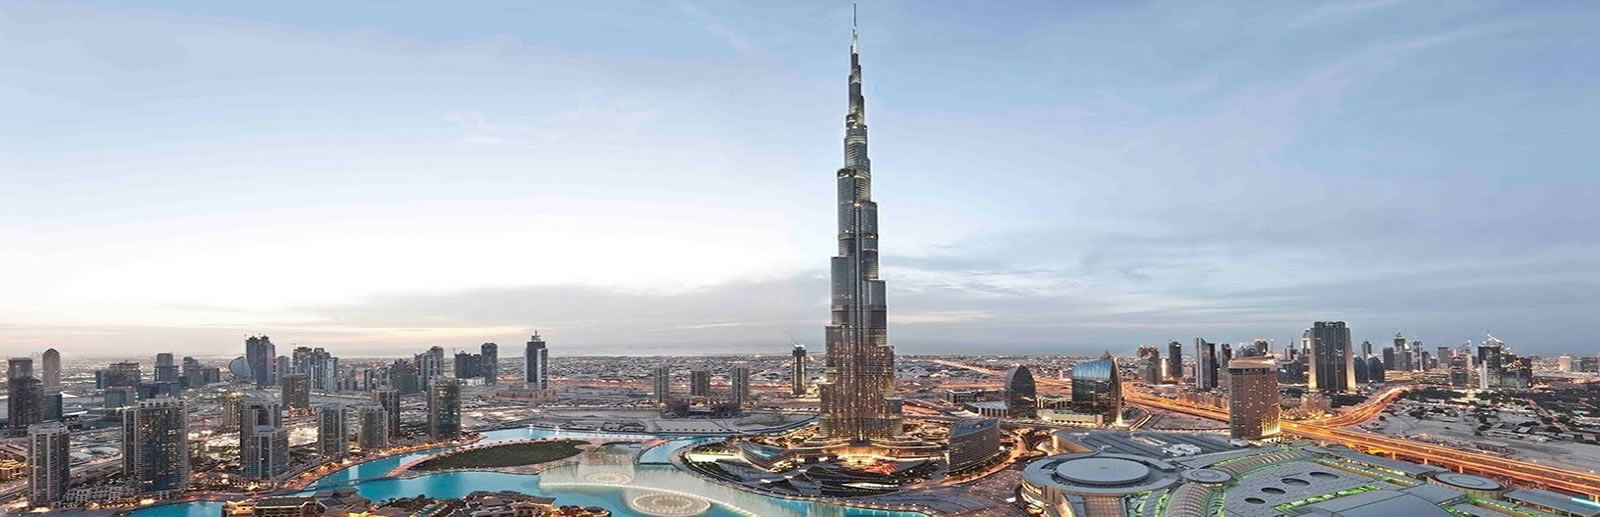 the tallest building in the world, the Burj Khalifa in Dubai